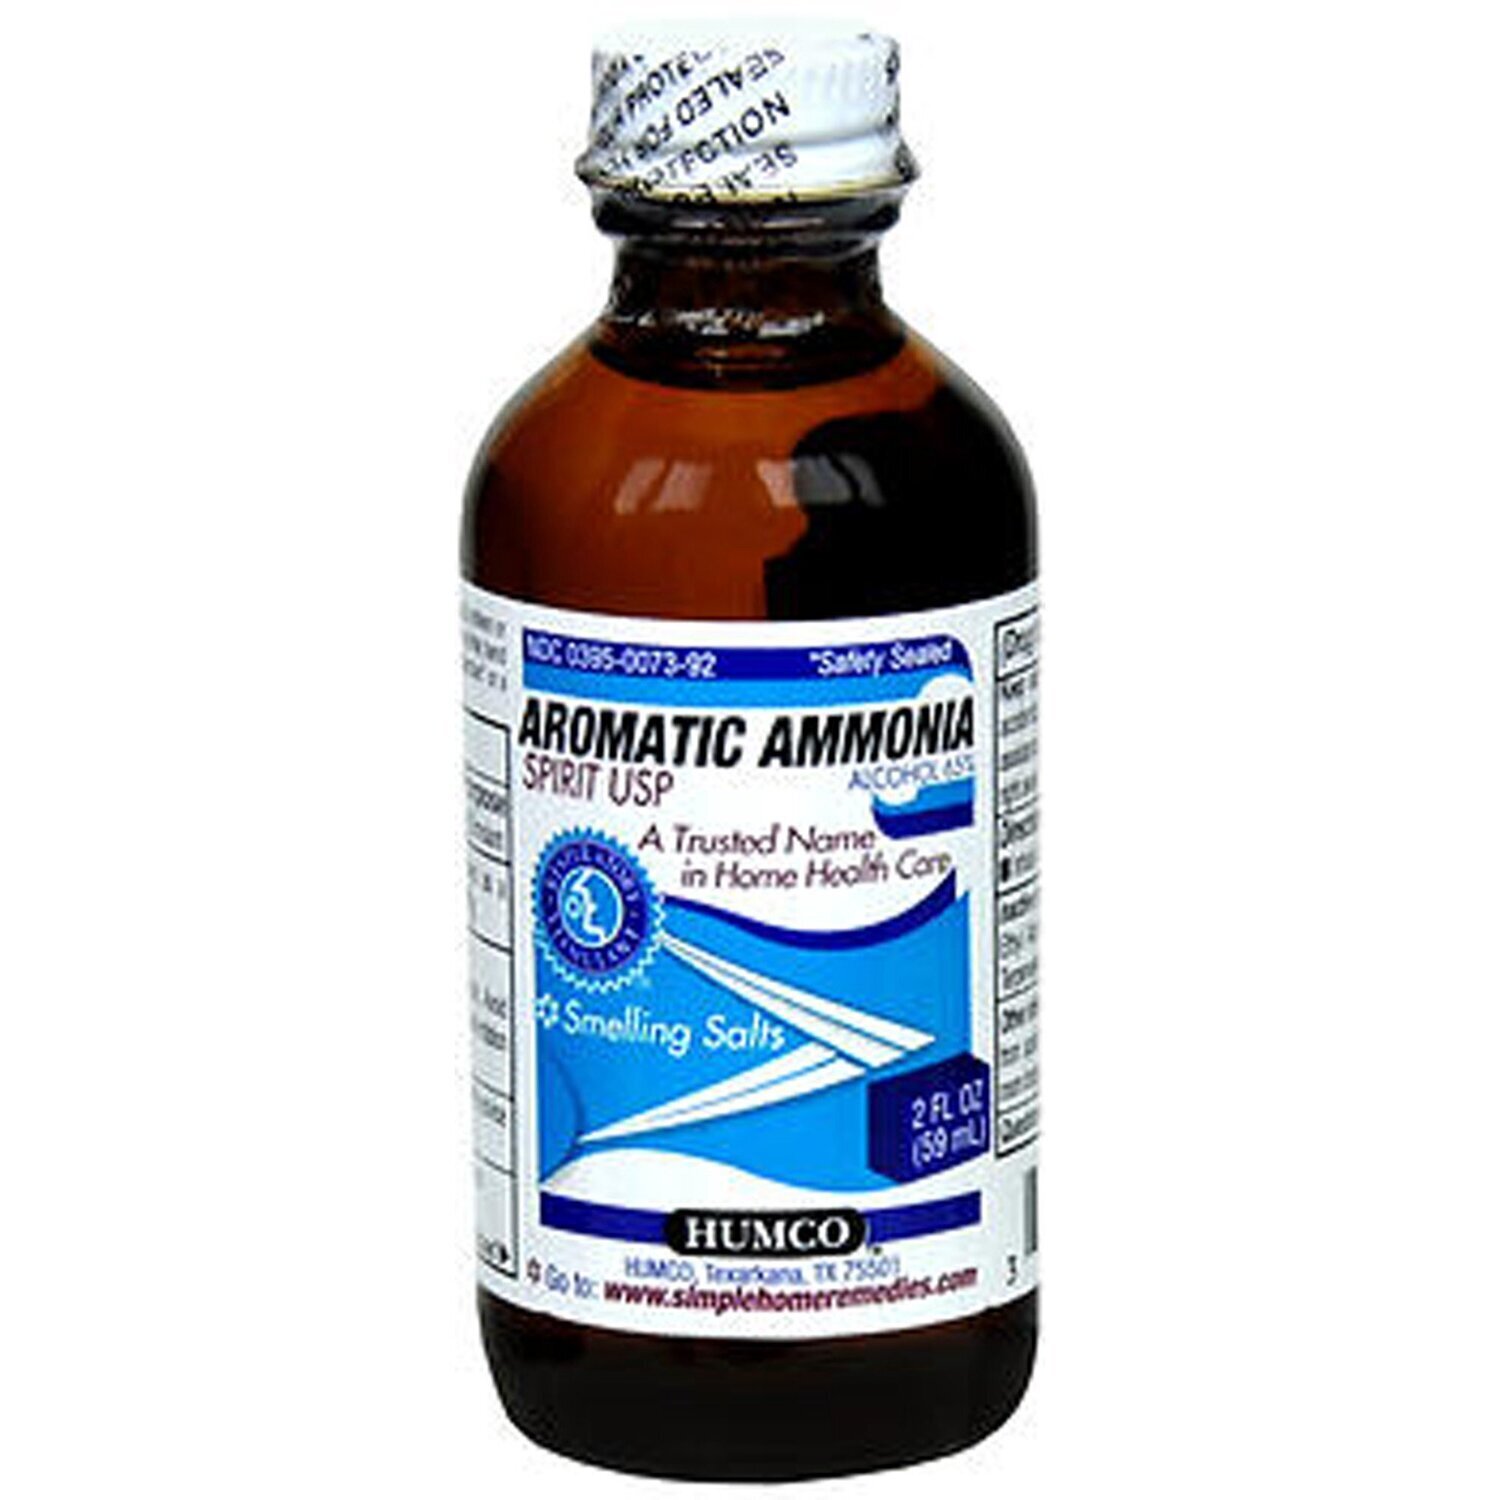 Chemical Market - Low Aromatic White Spirit Grade 2 - 8042-47-6